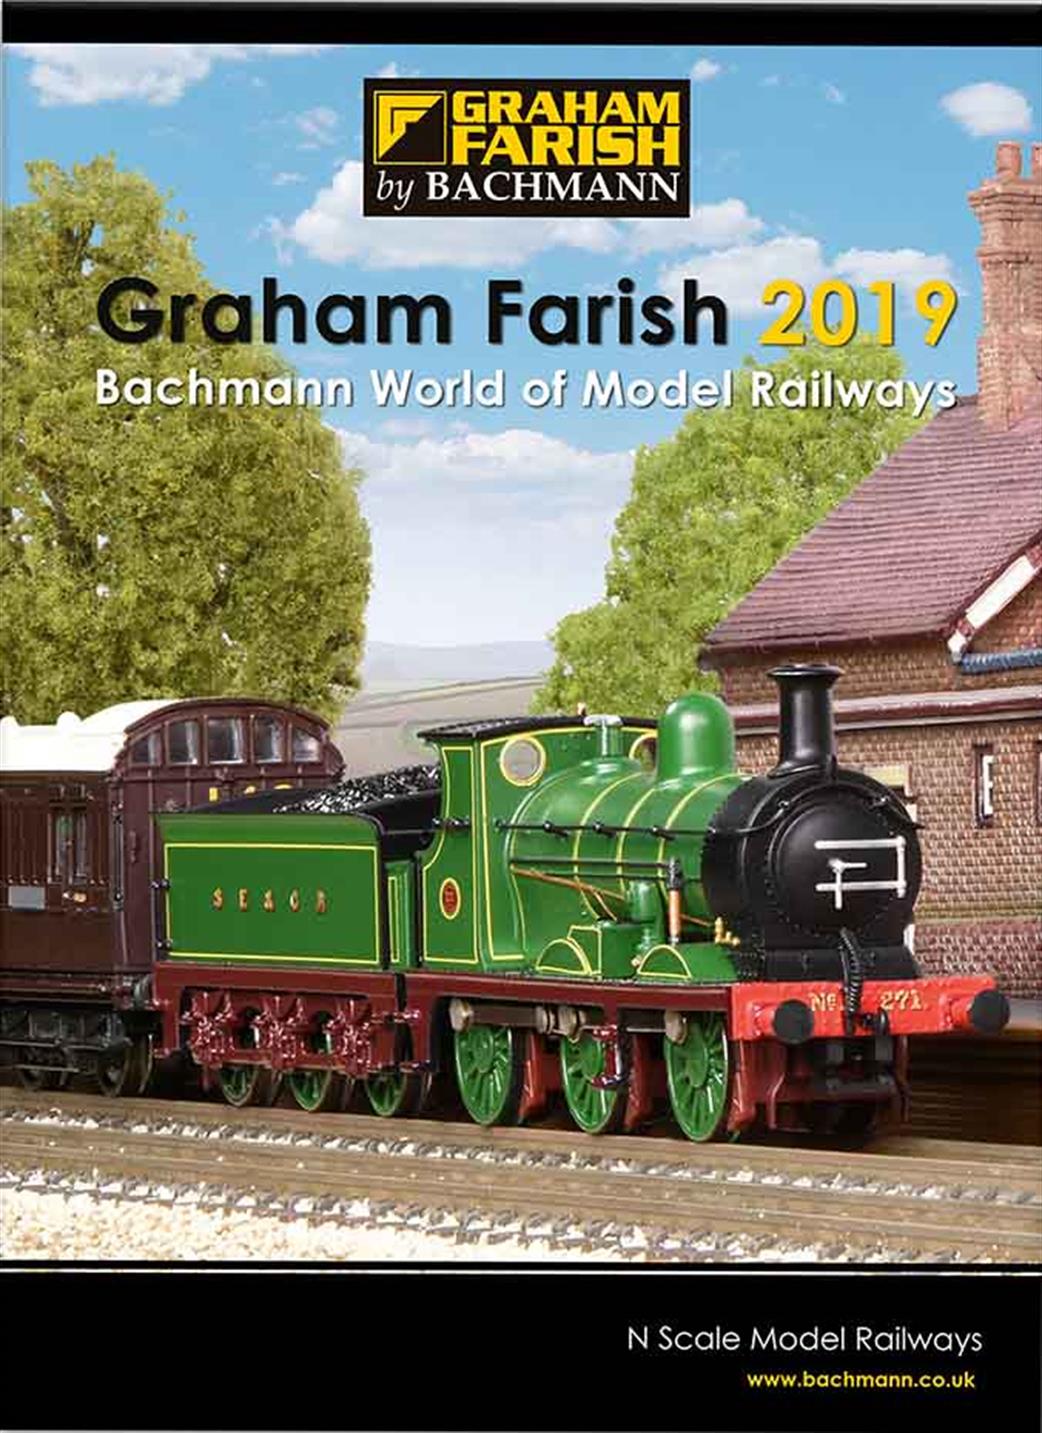 Graham Farish N 379-019 2019 Catalogue